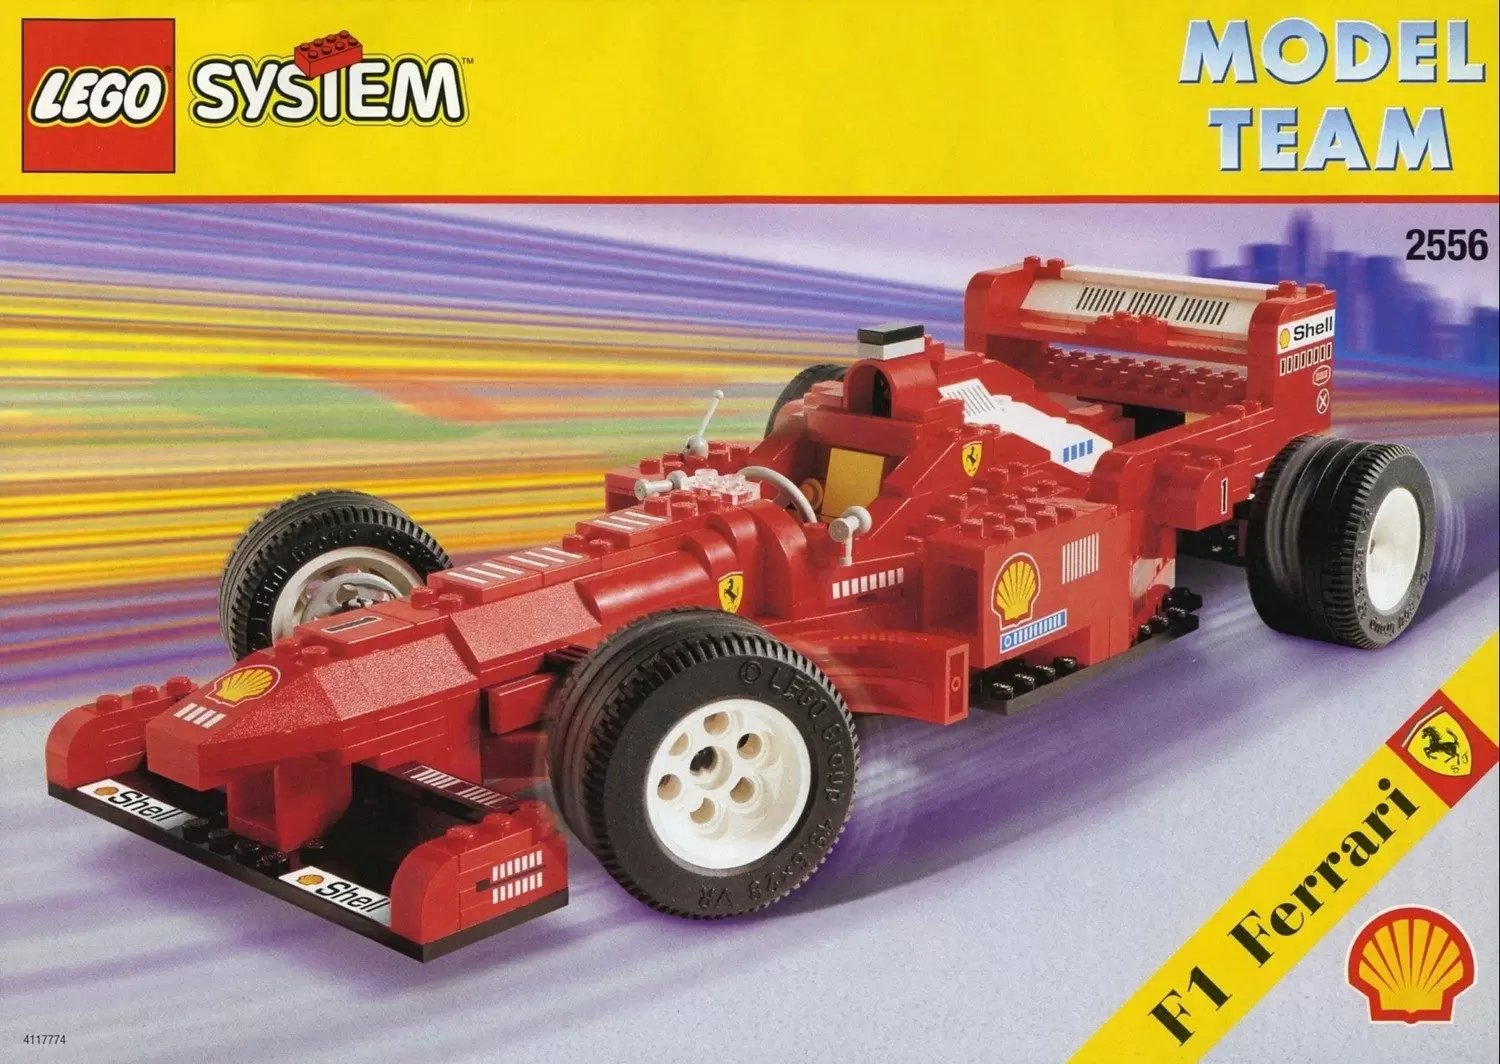 LEGO Model Team - Ferrari Formula 1 Racing Car